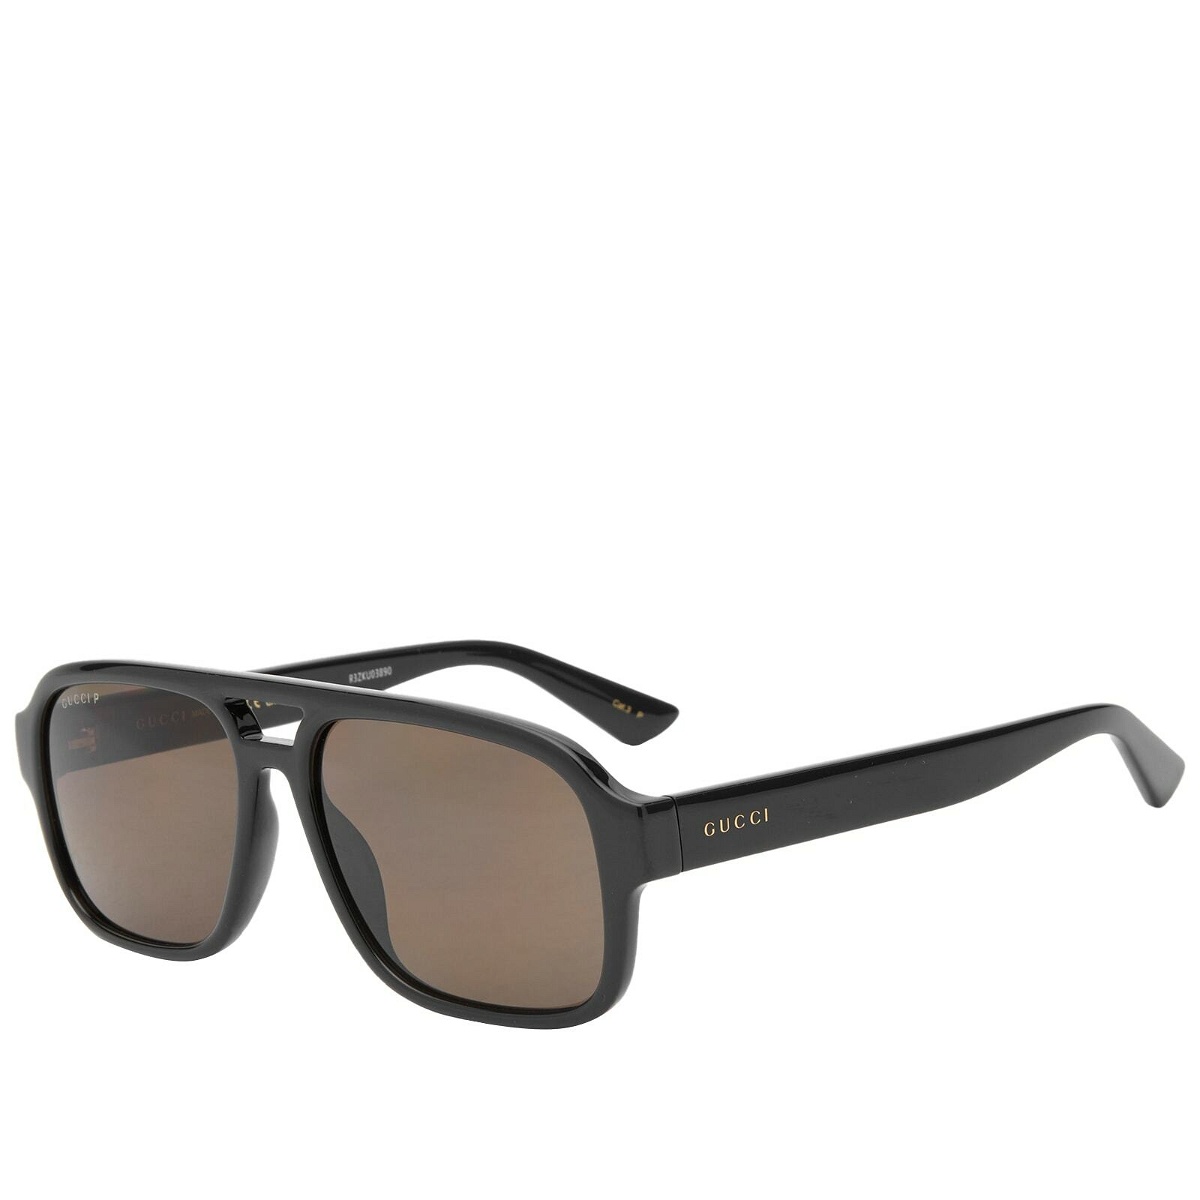 Gucci - Round Acetate Sunglasses - Black Acetate Grey Lenses - Gucci Eyewear  - Avvenice